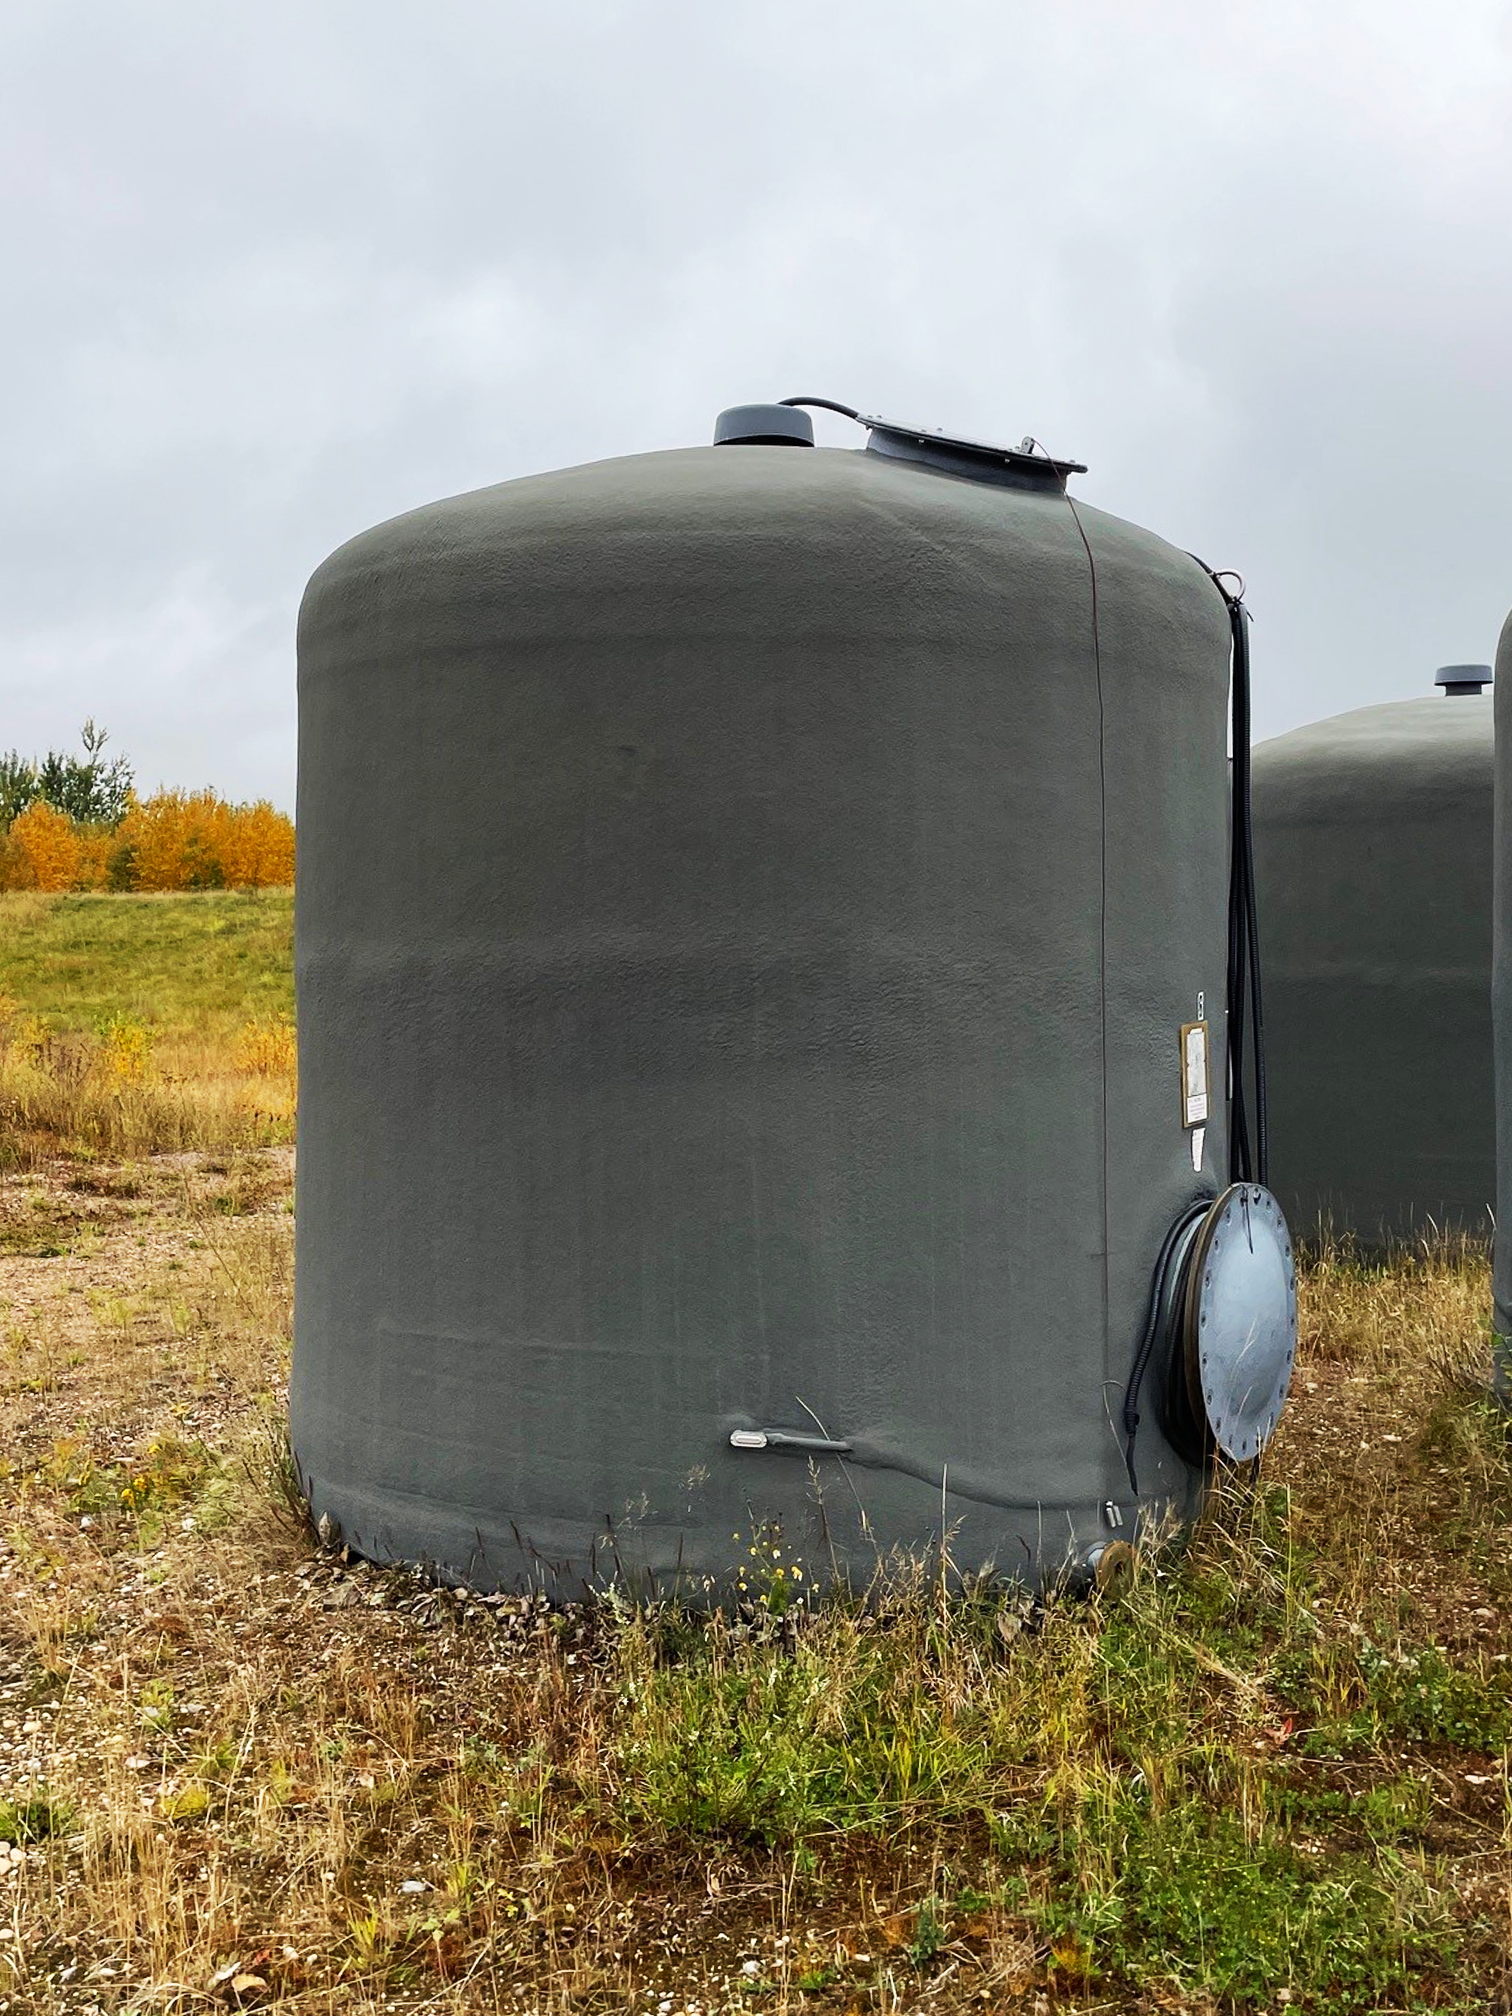 200 BBL Fiberglass Insulated Heated Storage Tanks